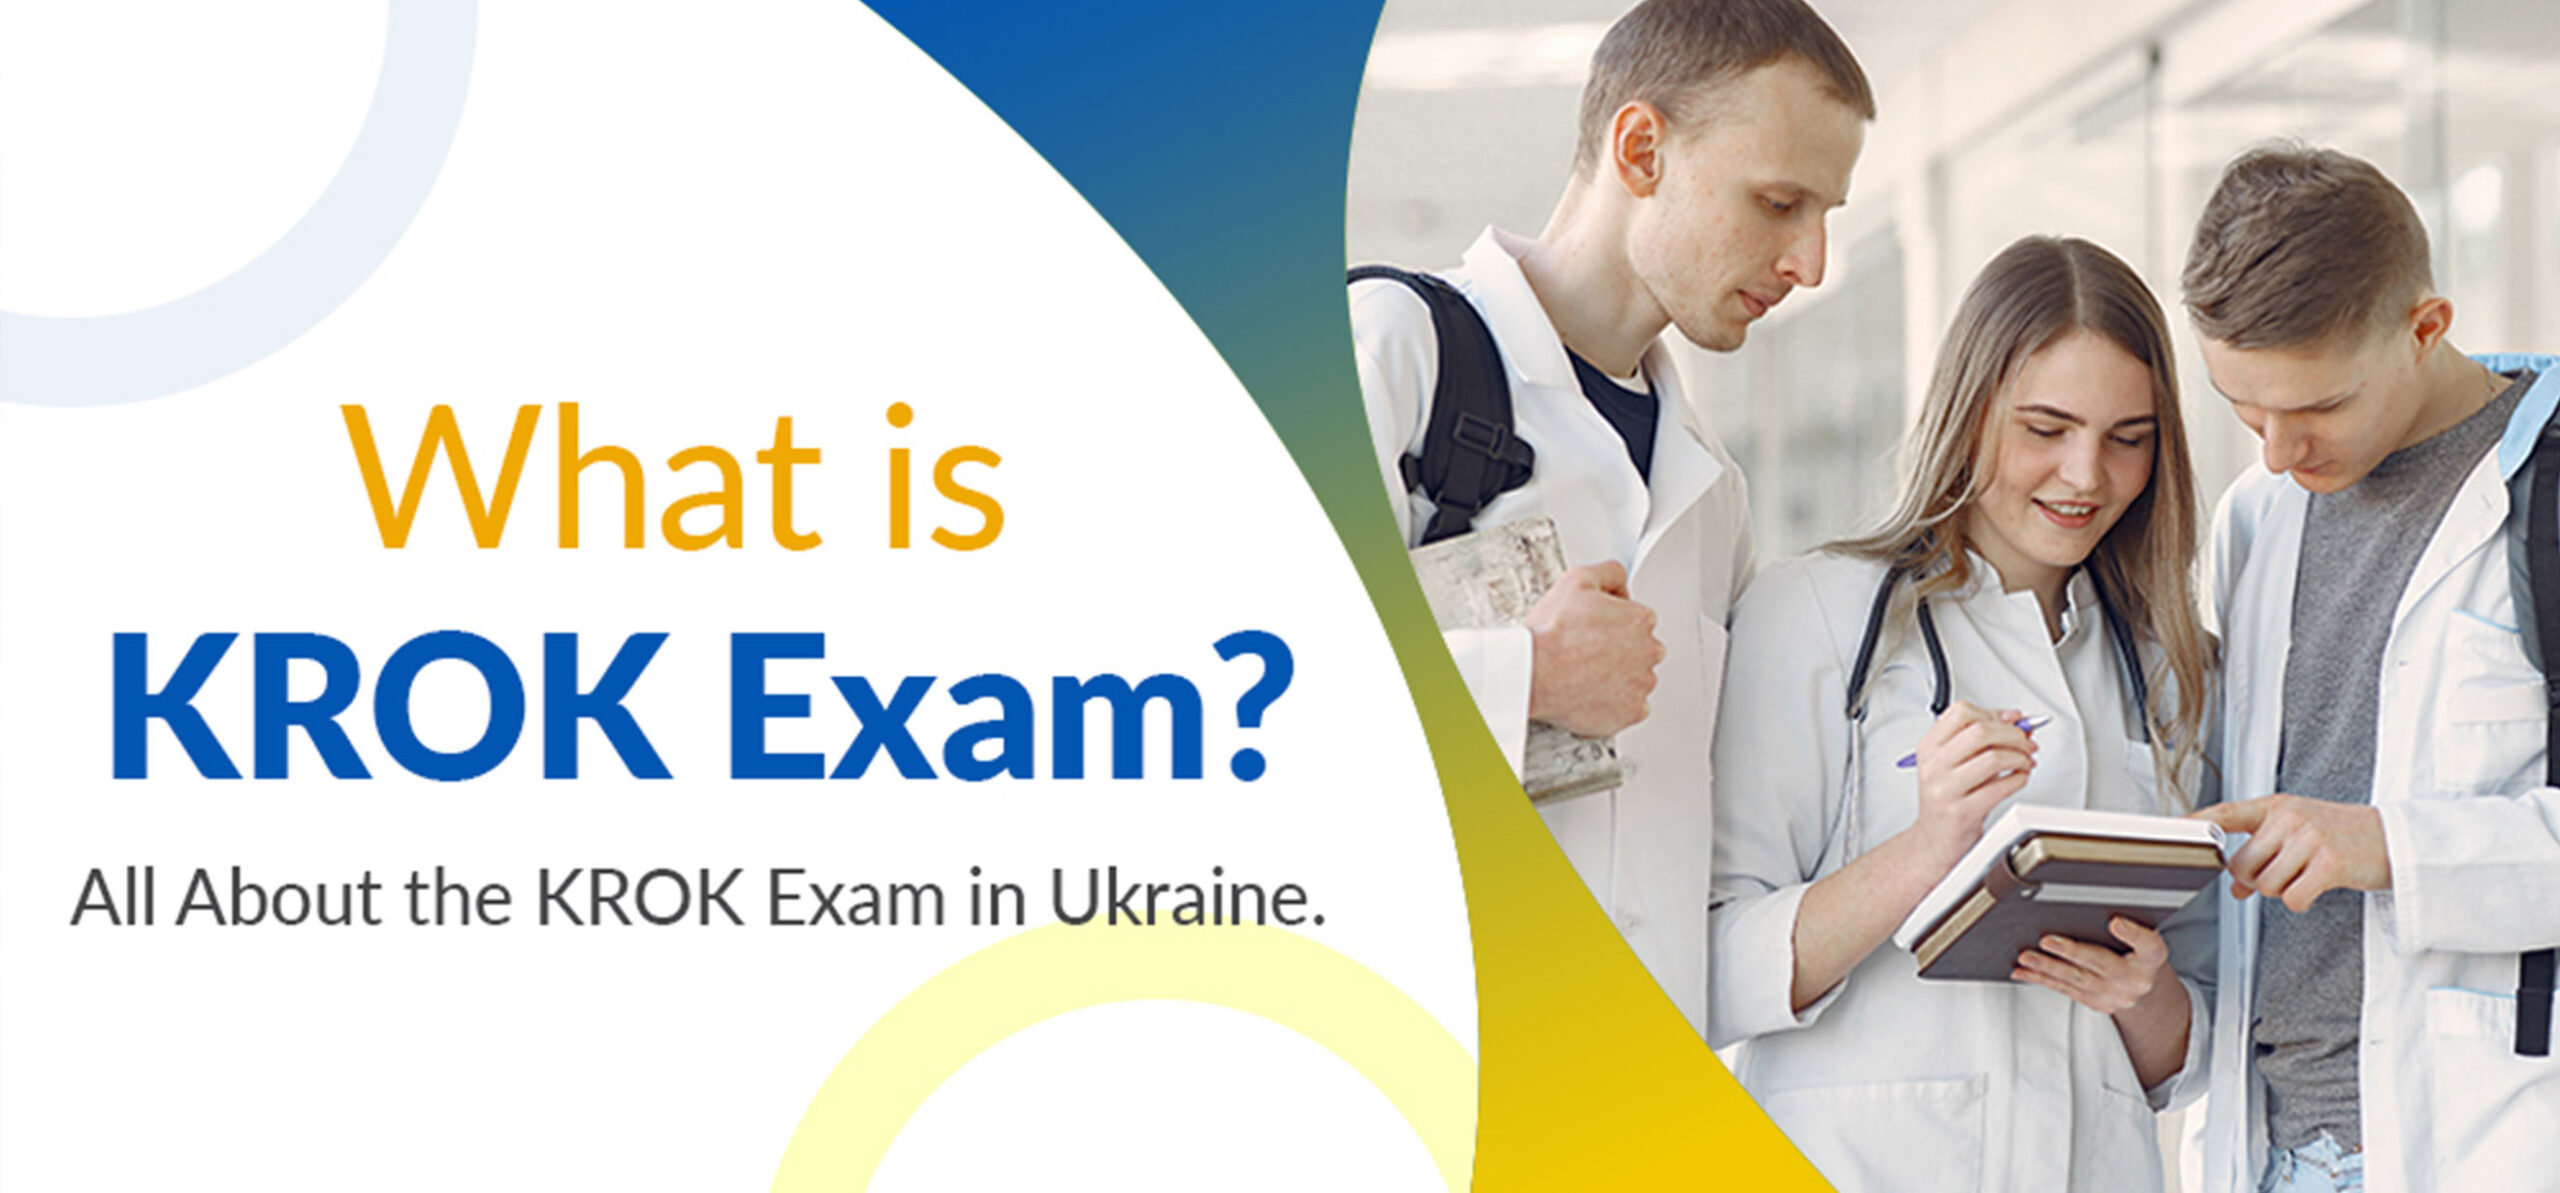 Krok Exam in Ukraine